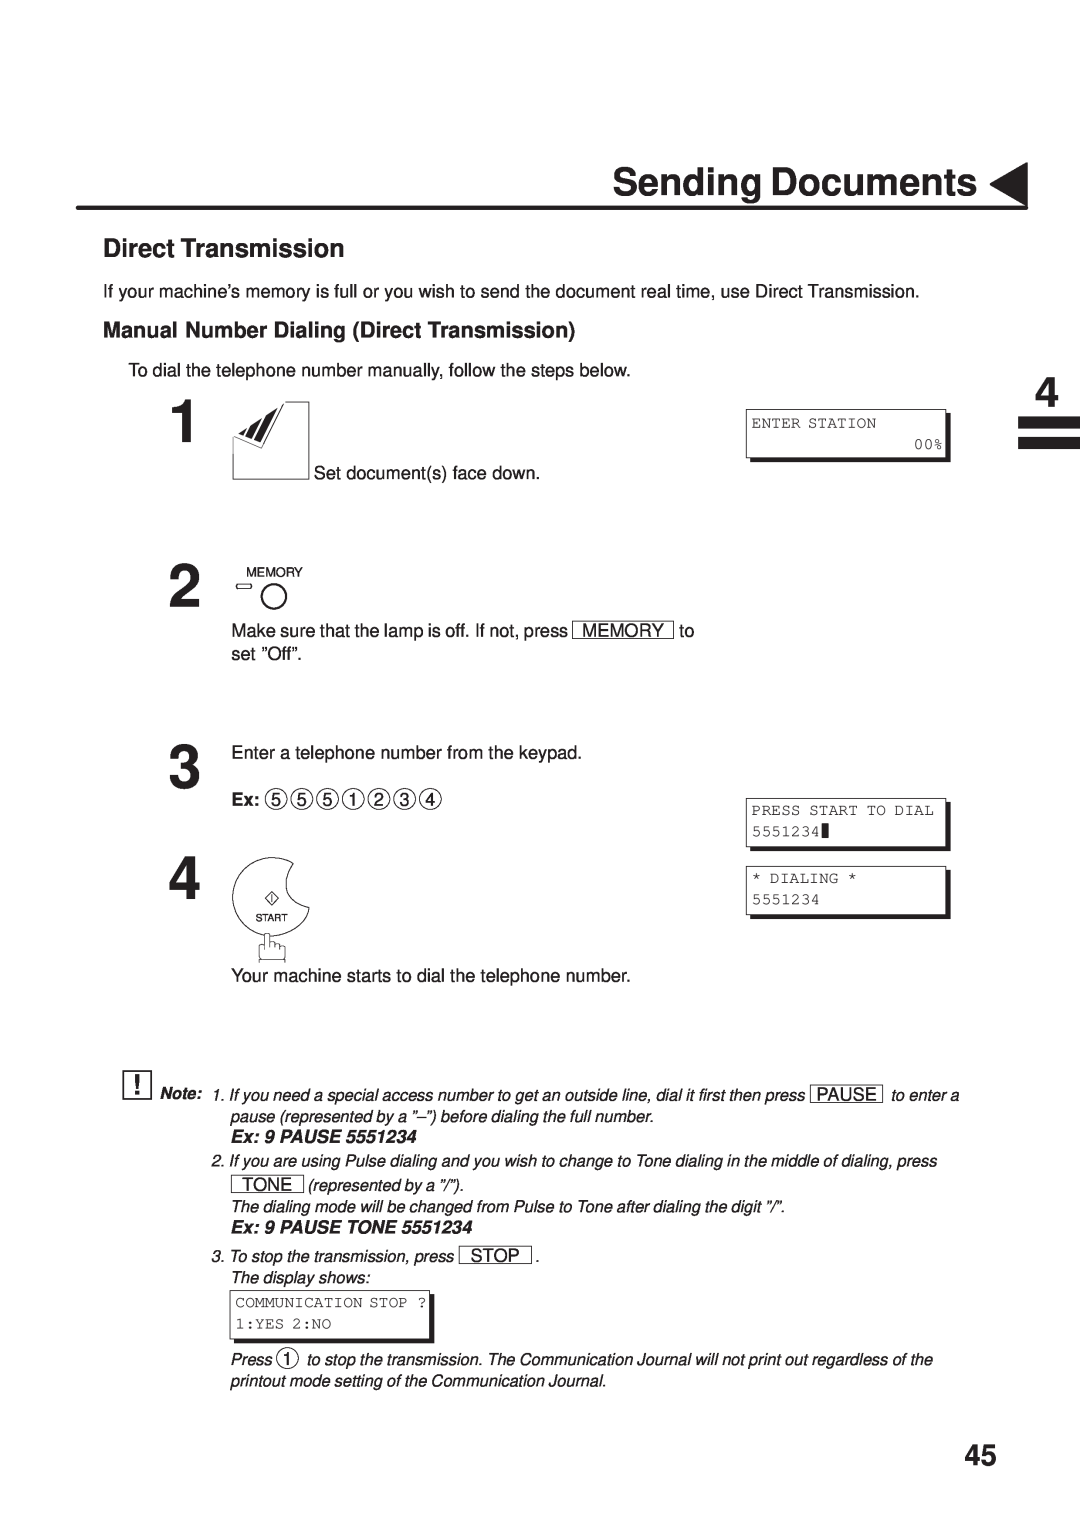 Panasonic UF-333 manual Manual Number Dialing Direct Transmission, Sending Documents, Ex 9 PAUSE TONE 